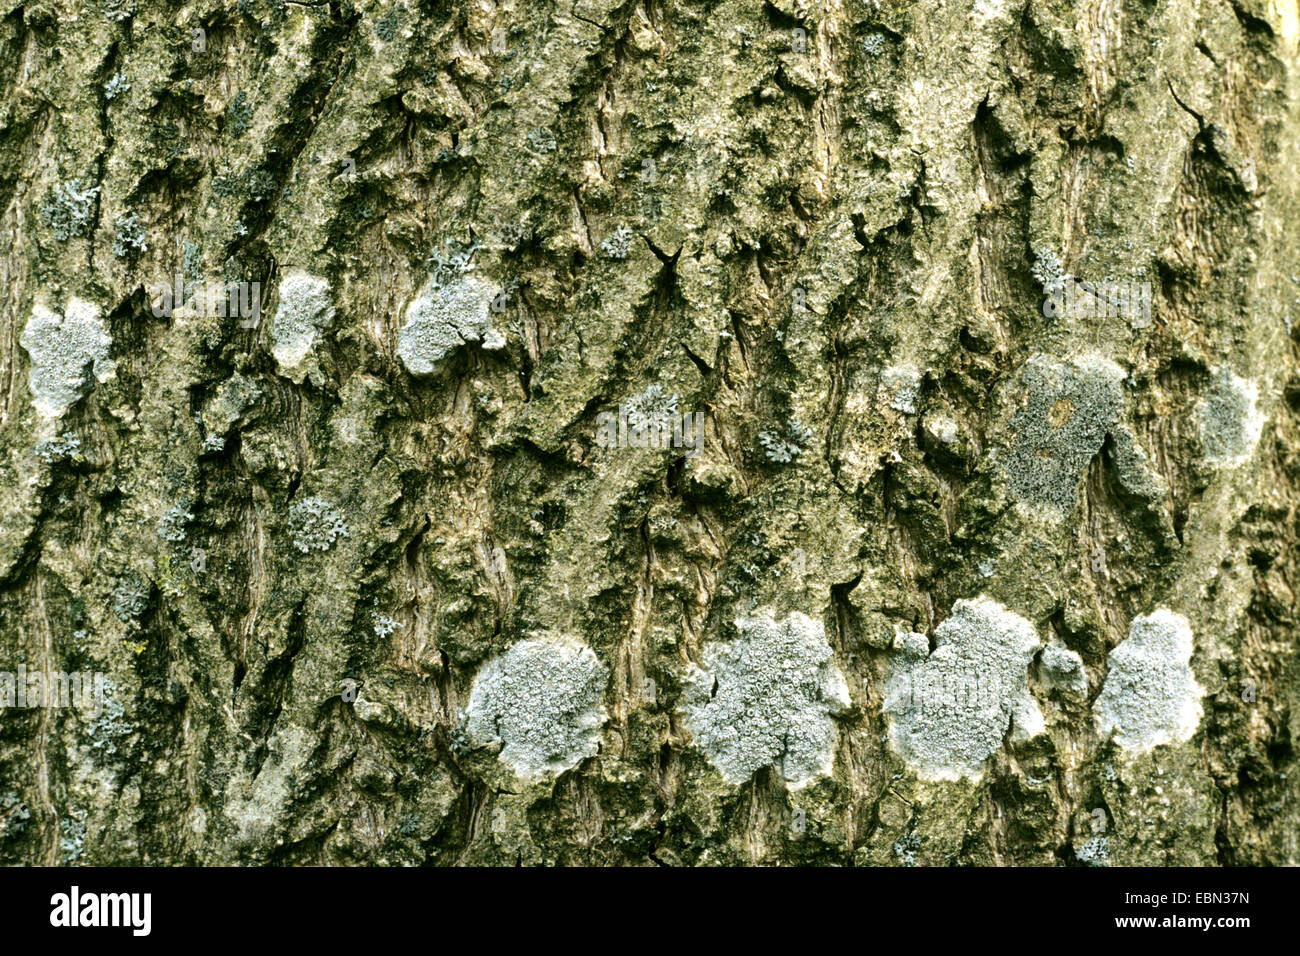 white walnut, butternut (Juglans cinerea), lichens on the bark of the tree trunk Stock Photo